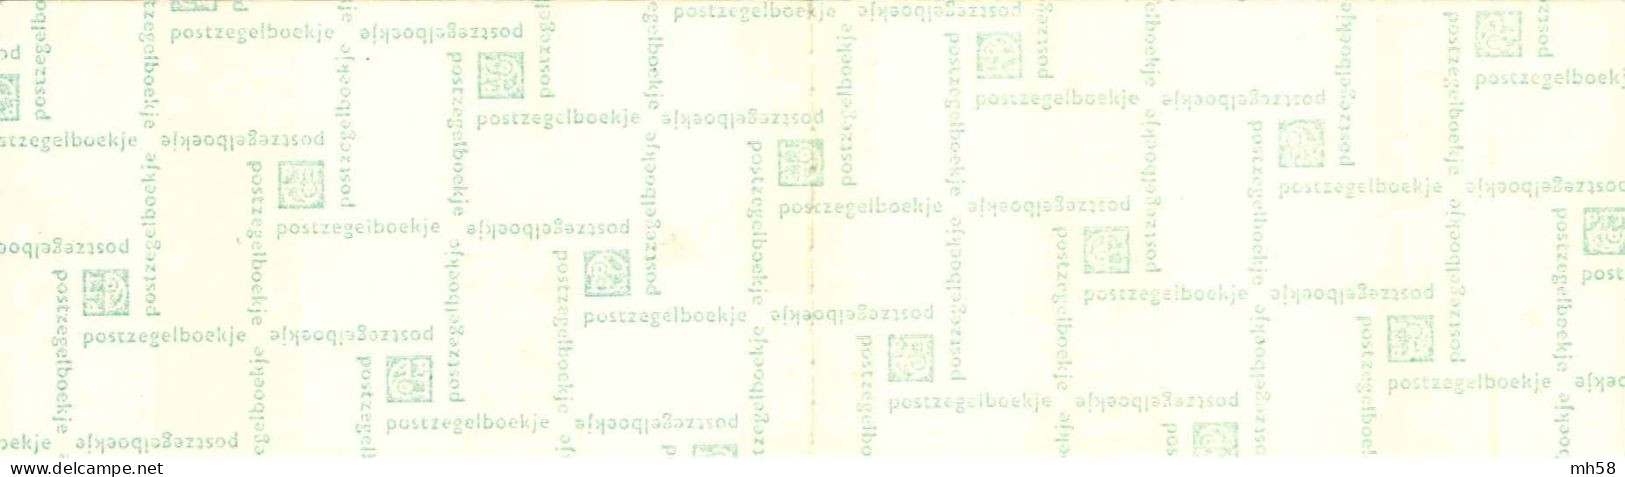 PAYS-BAS NEDERLAND 1967 - Carnet / Booklet / MH Sans Indice - 1 G Juliana Sans Phospho - YT C 600AbA / MI MH 7x - Libretti